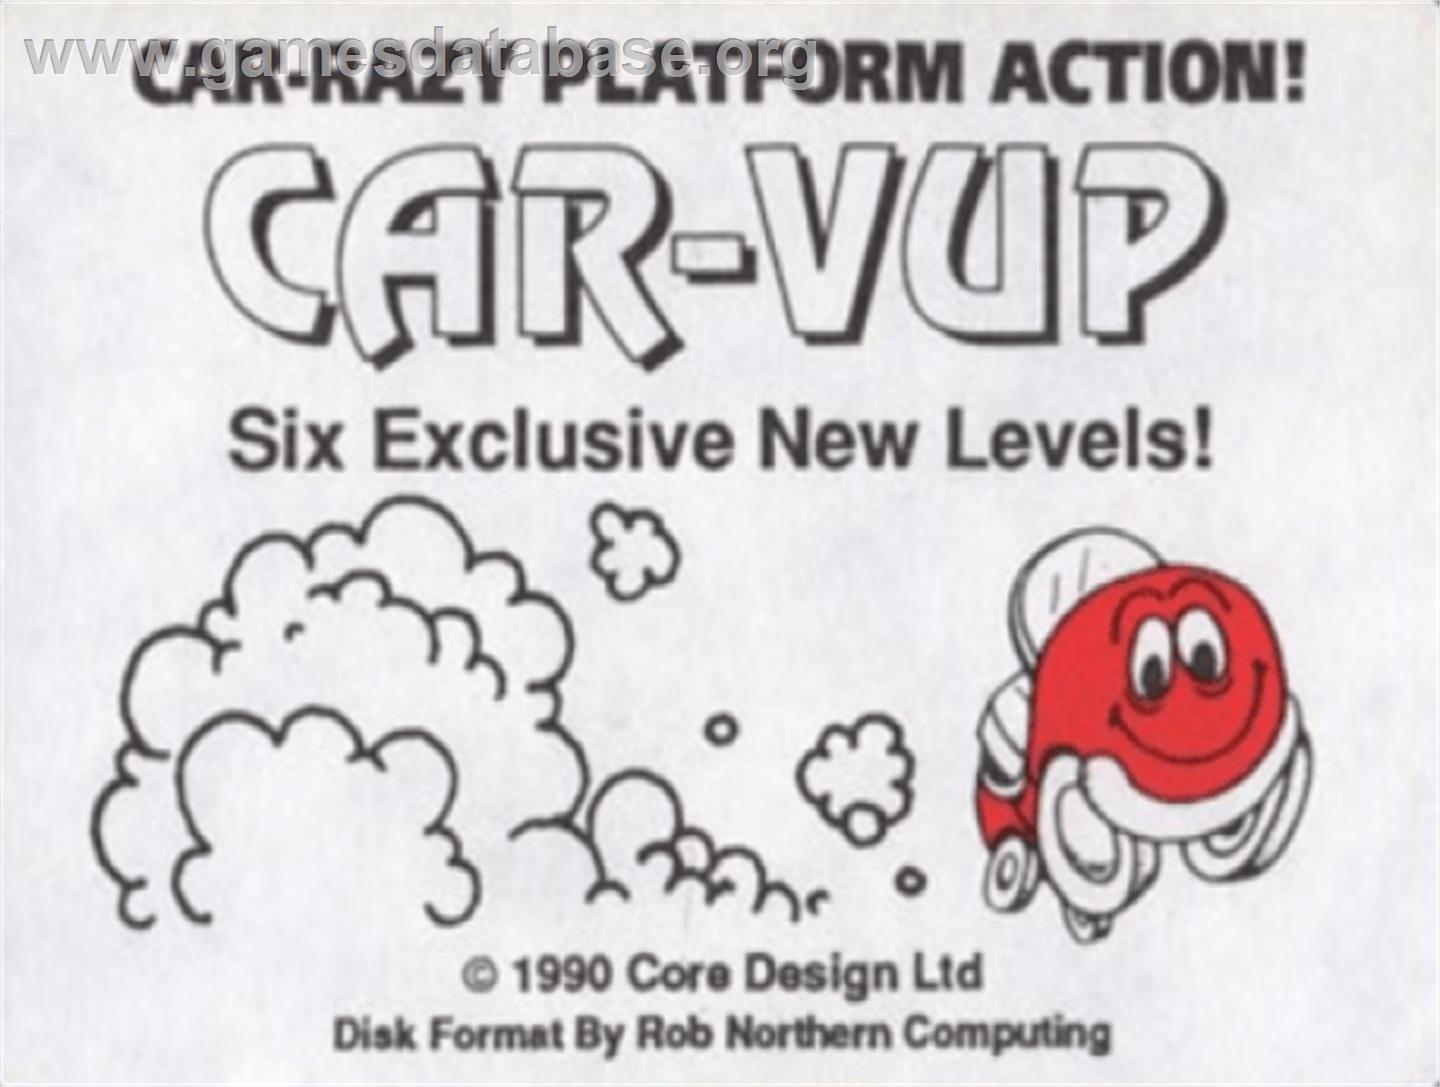 Car-Vup - Commodore Amiga - Artwork - Cartridge Top